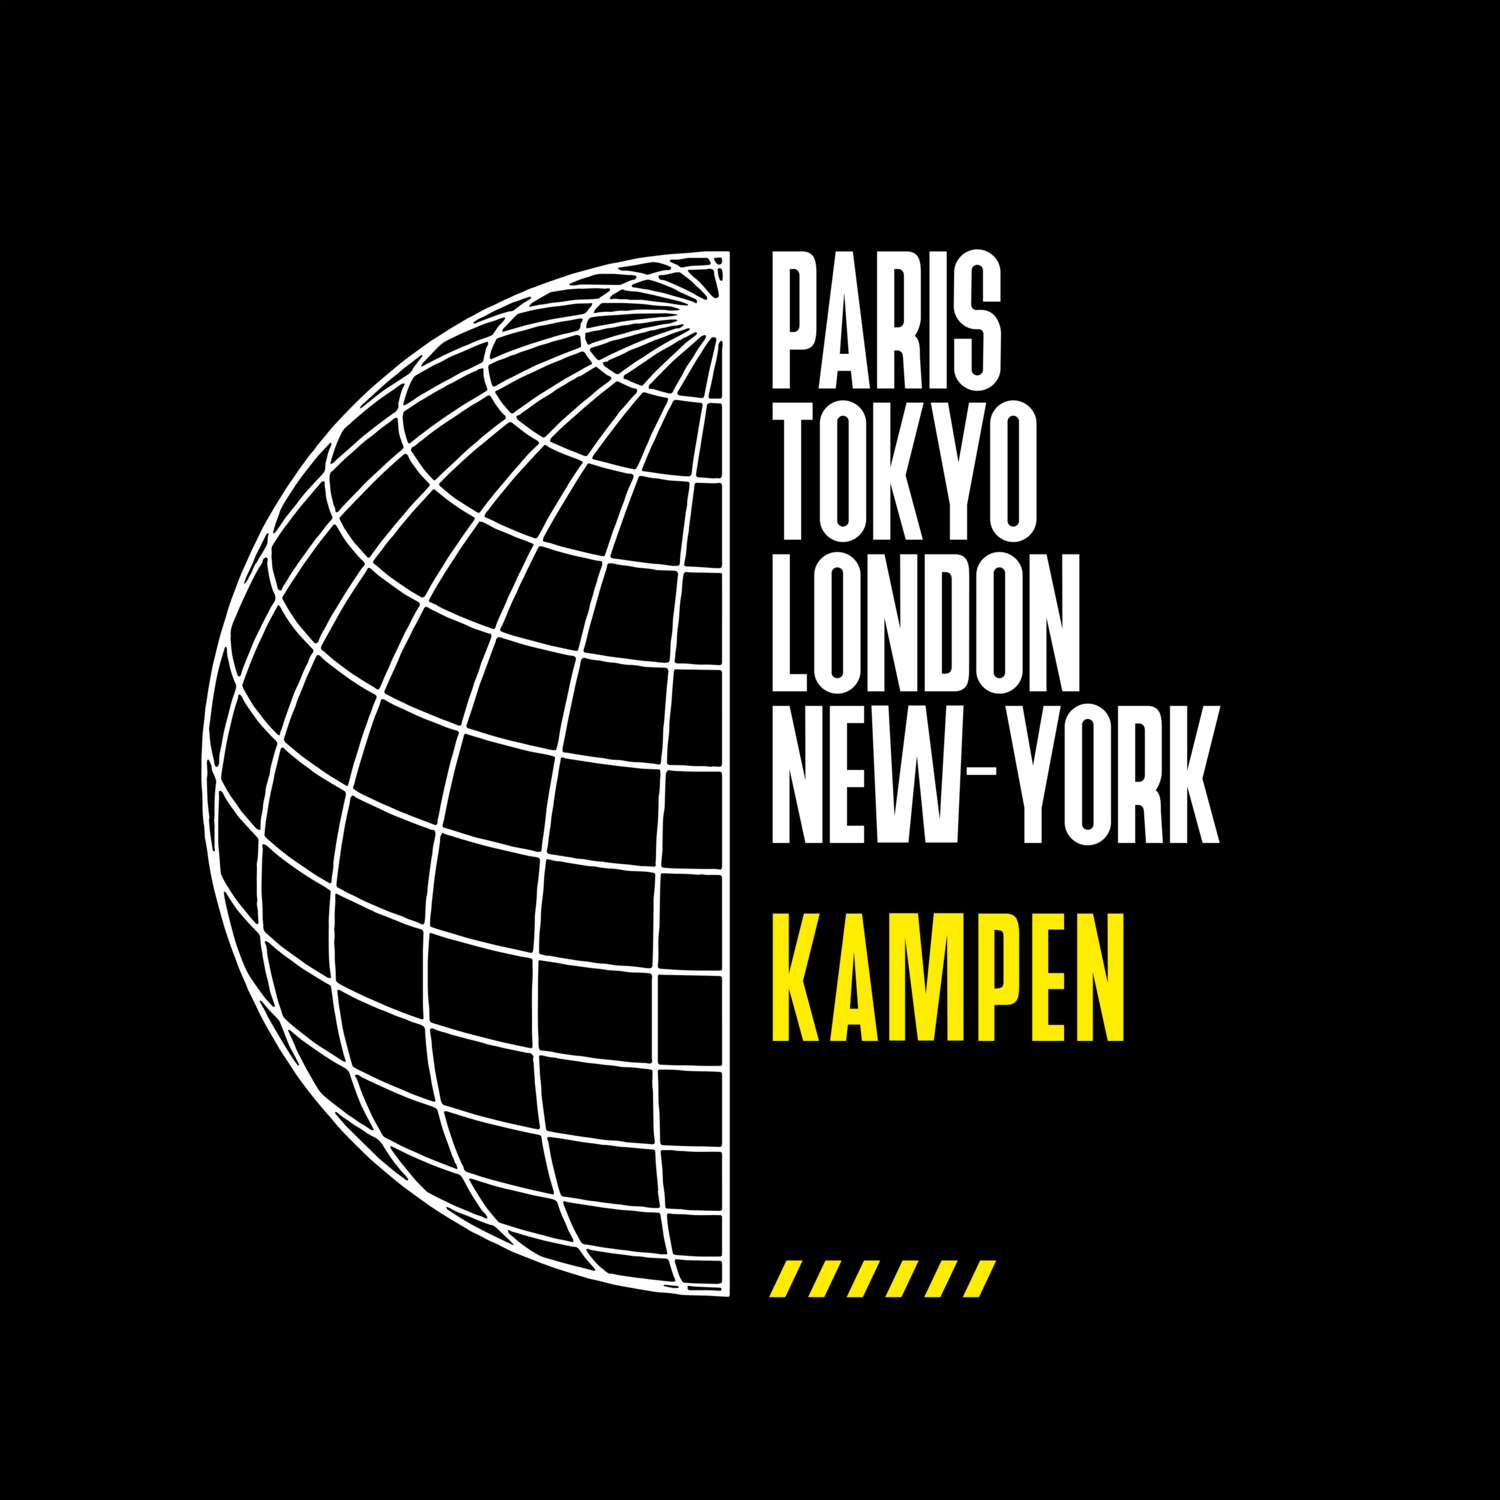 Kampen T-Shirt »Paris Tokyo London«